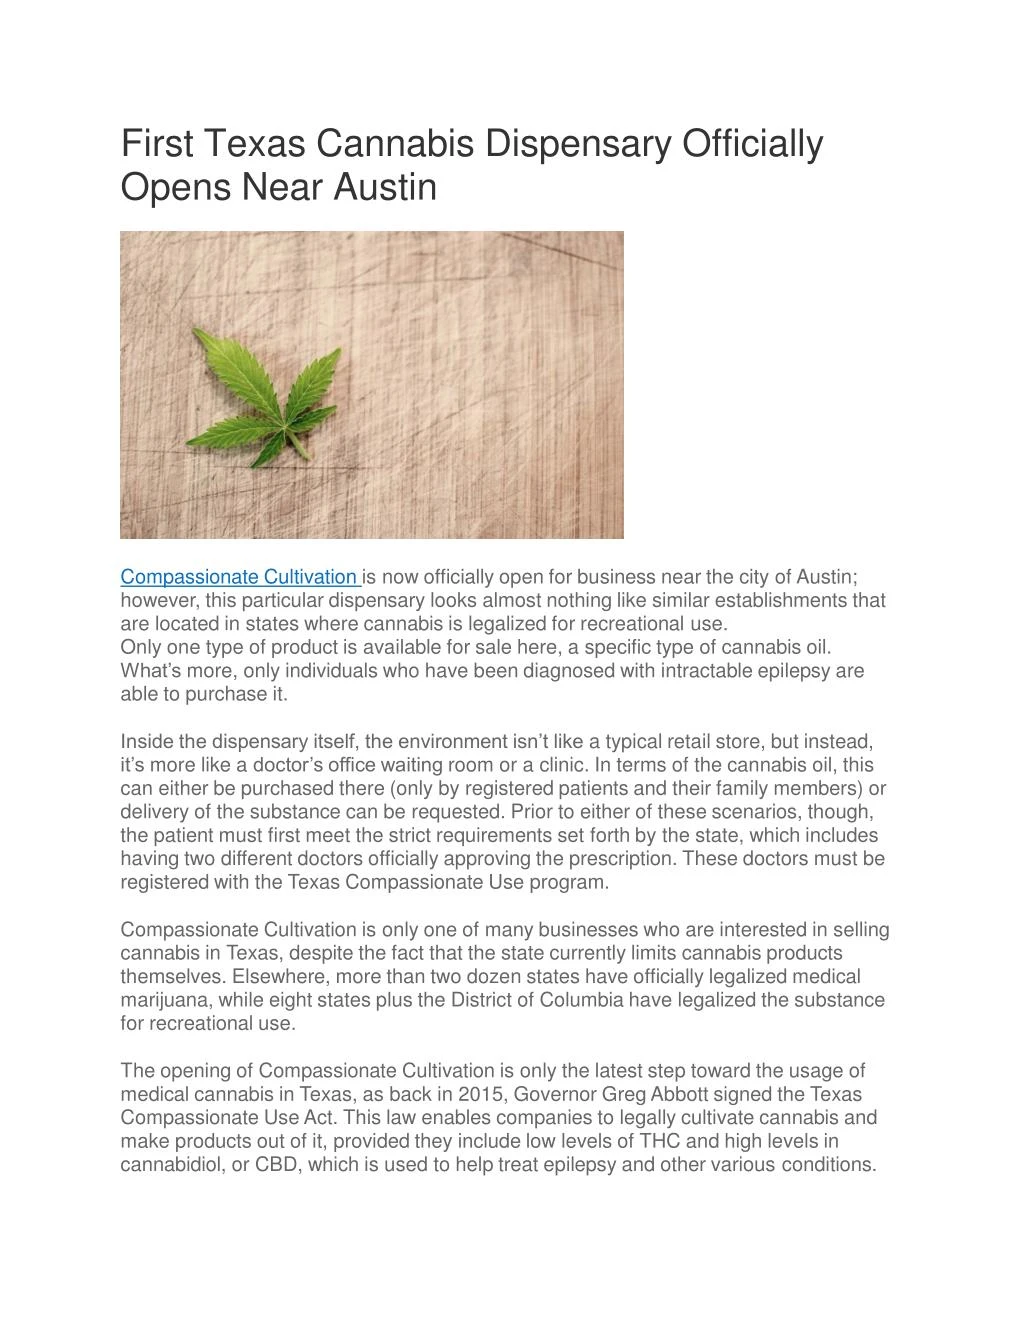 first texas cannabis dispensary officially opens near austin